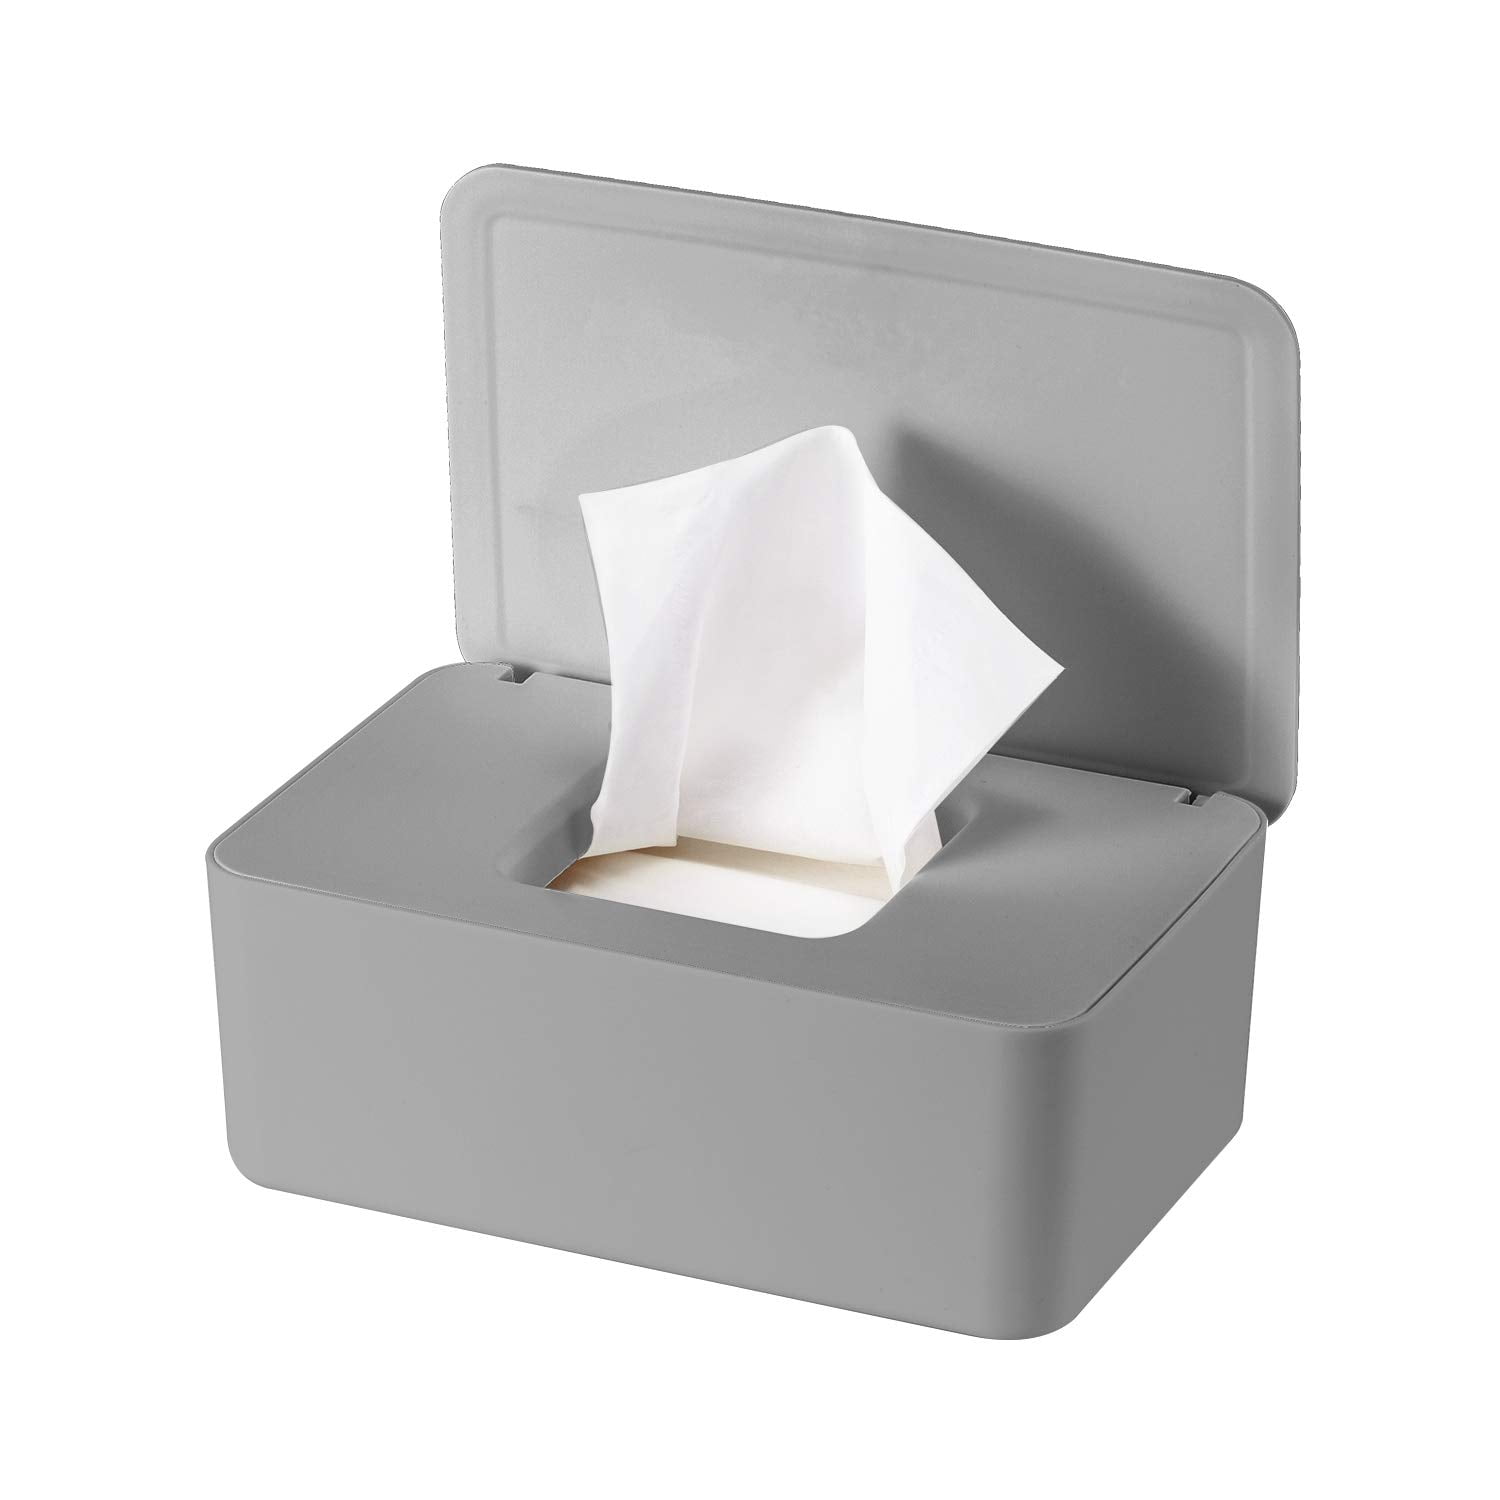 Wipes Dispenser Box Dry Wet Tissue Paper Case Holder Napkin Napkin Box Holder with Lid for Home Office Dustproof Holder Tissue Storage Box,Toilet Storage Box,White